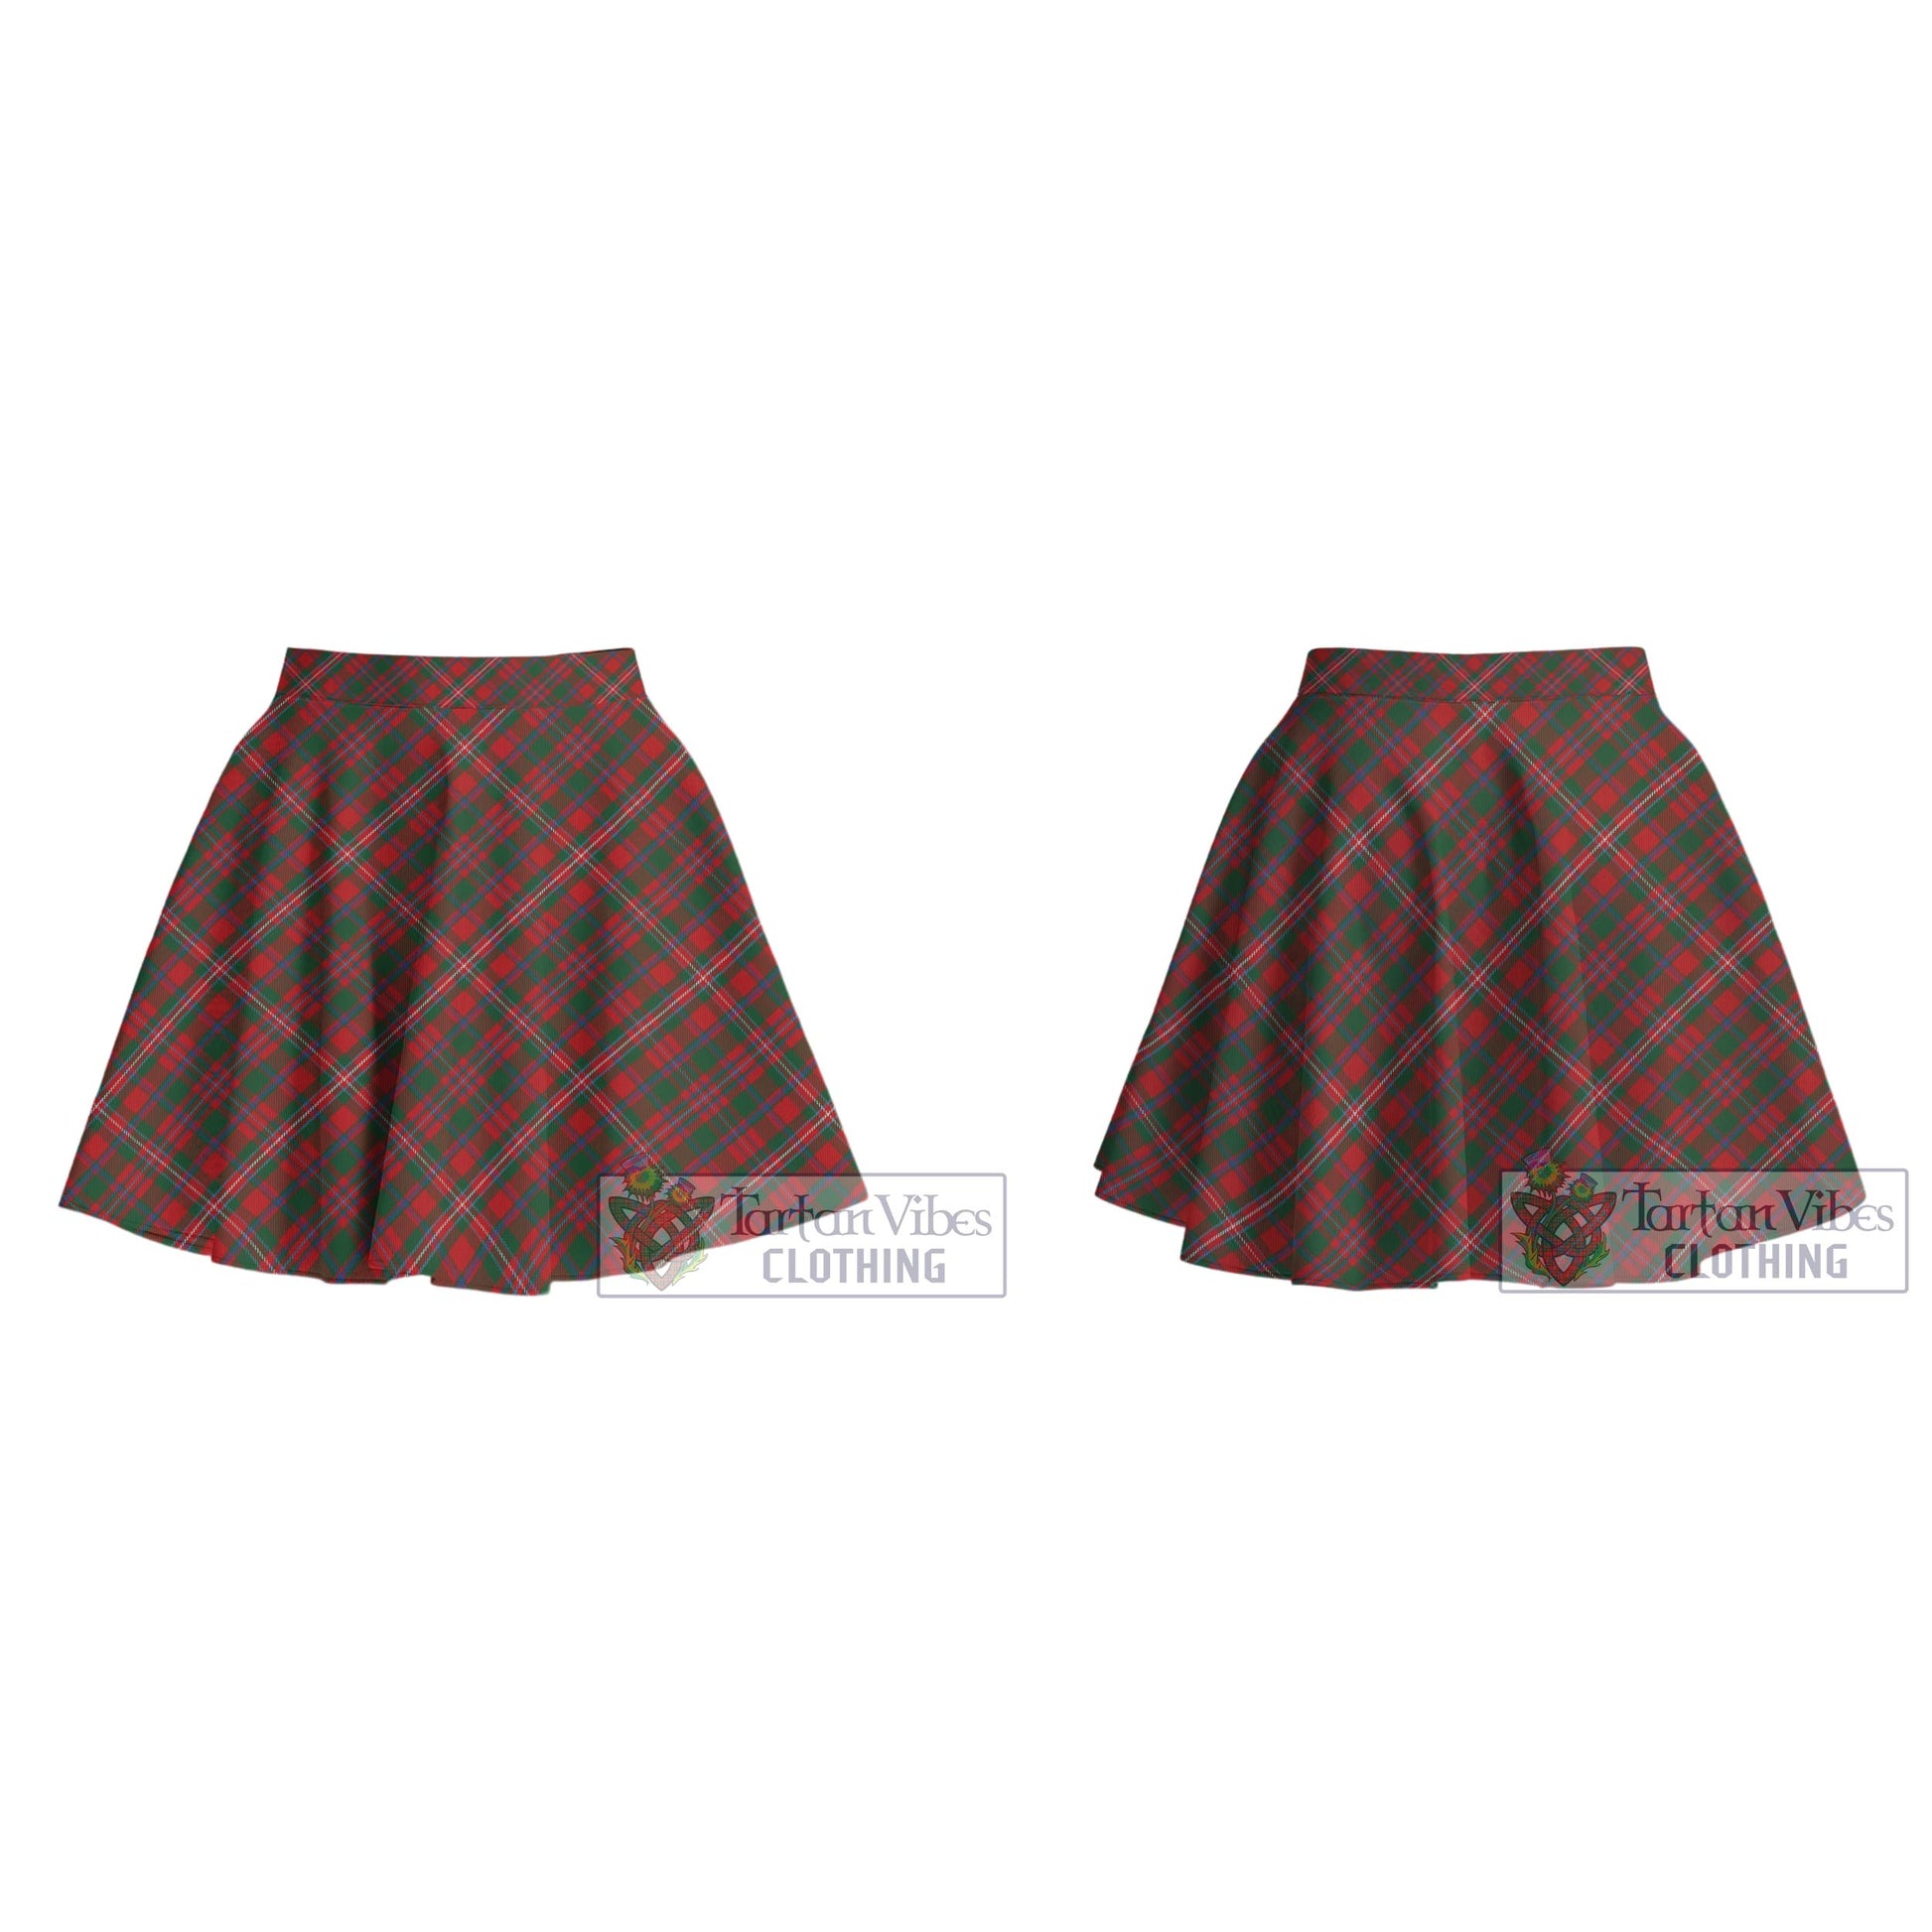 Tartan Vibes Clothing MacKinnon Tartan Women's Plated Mini Skirt